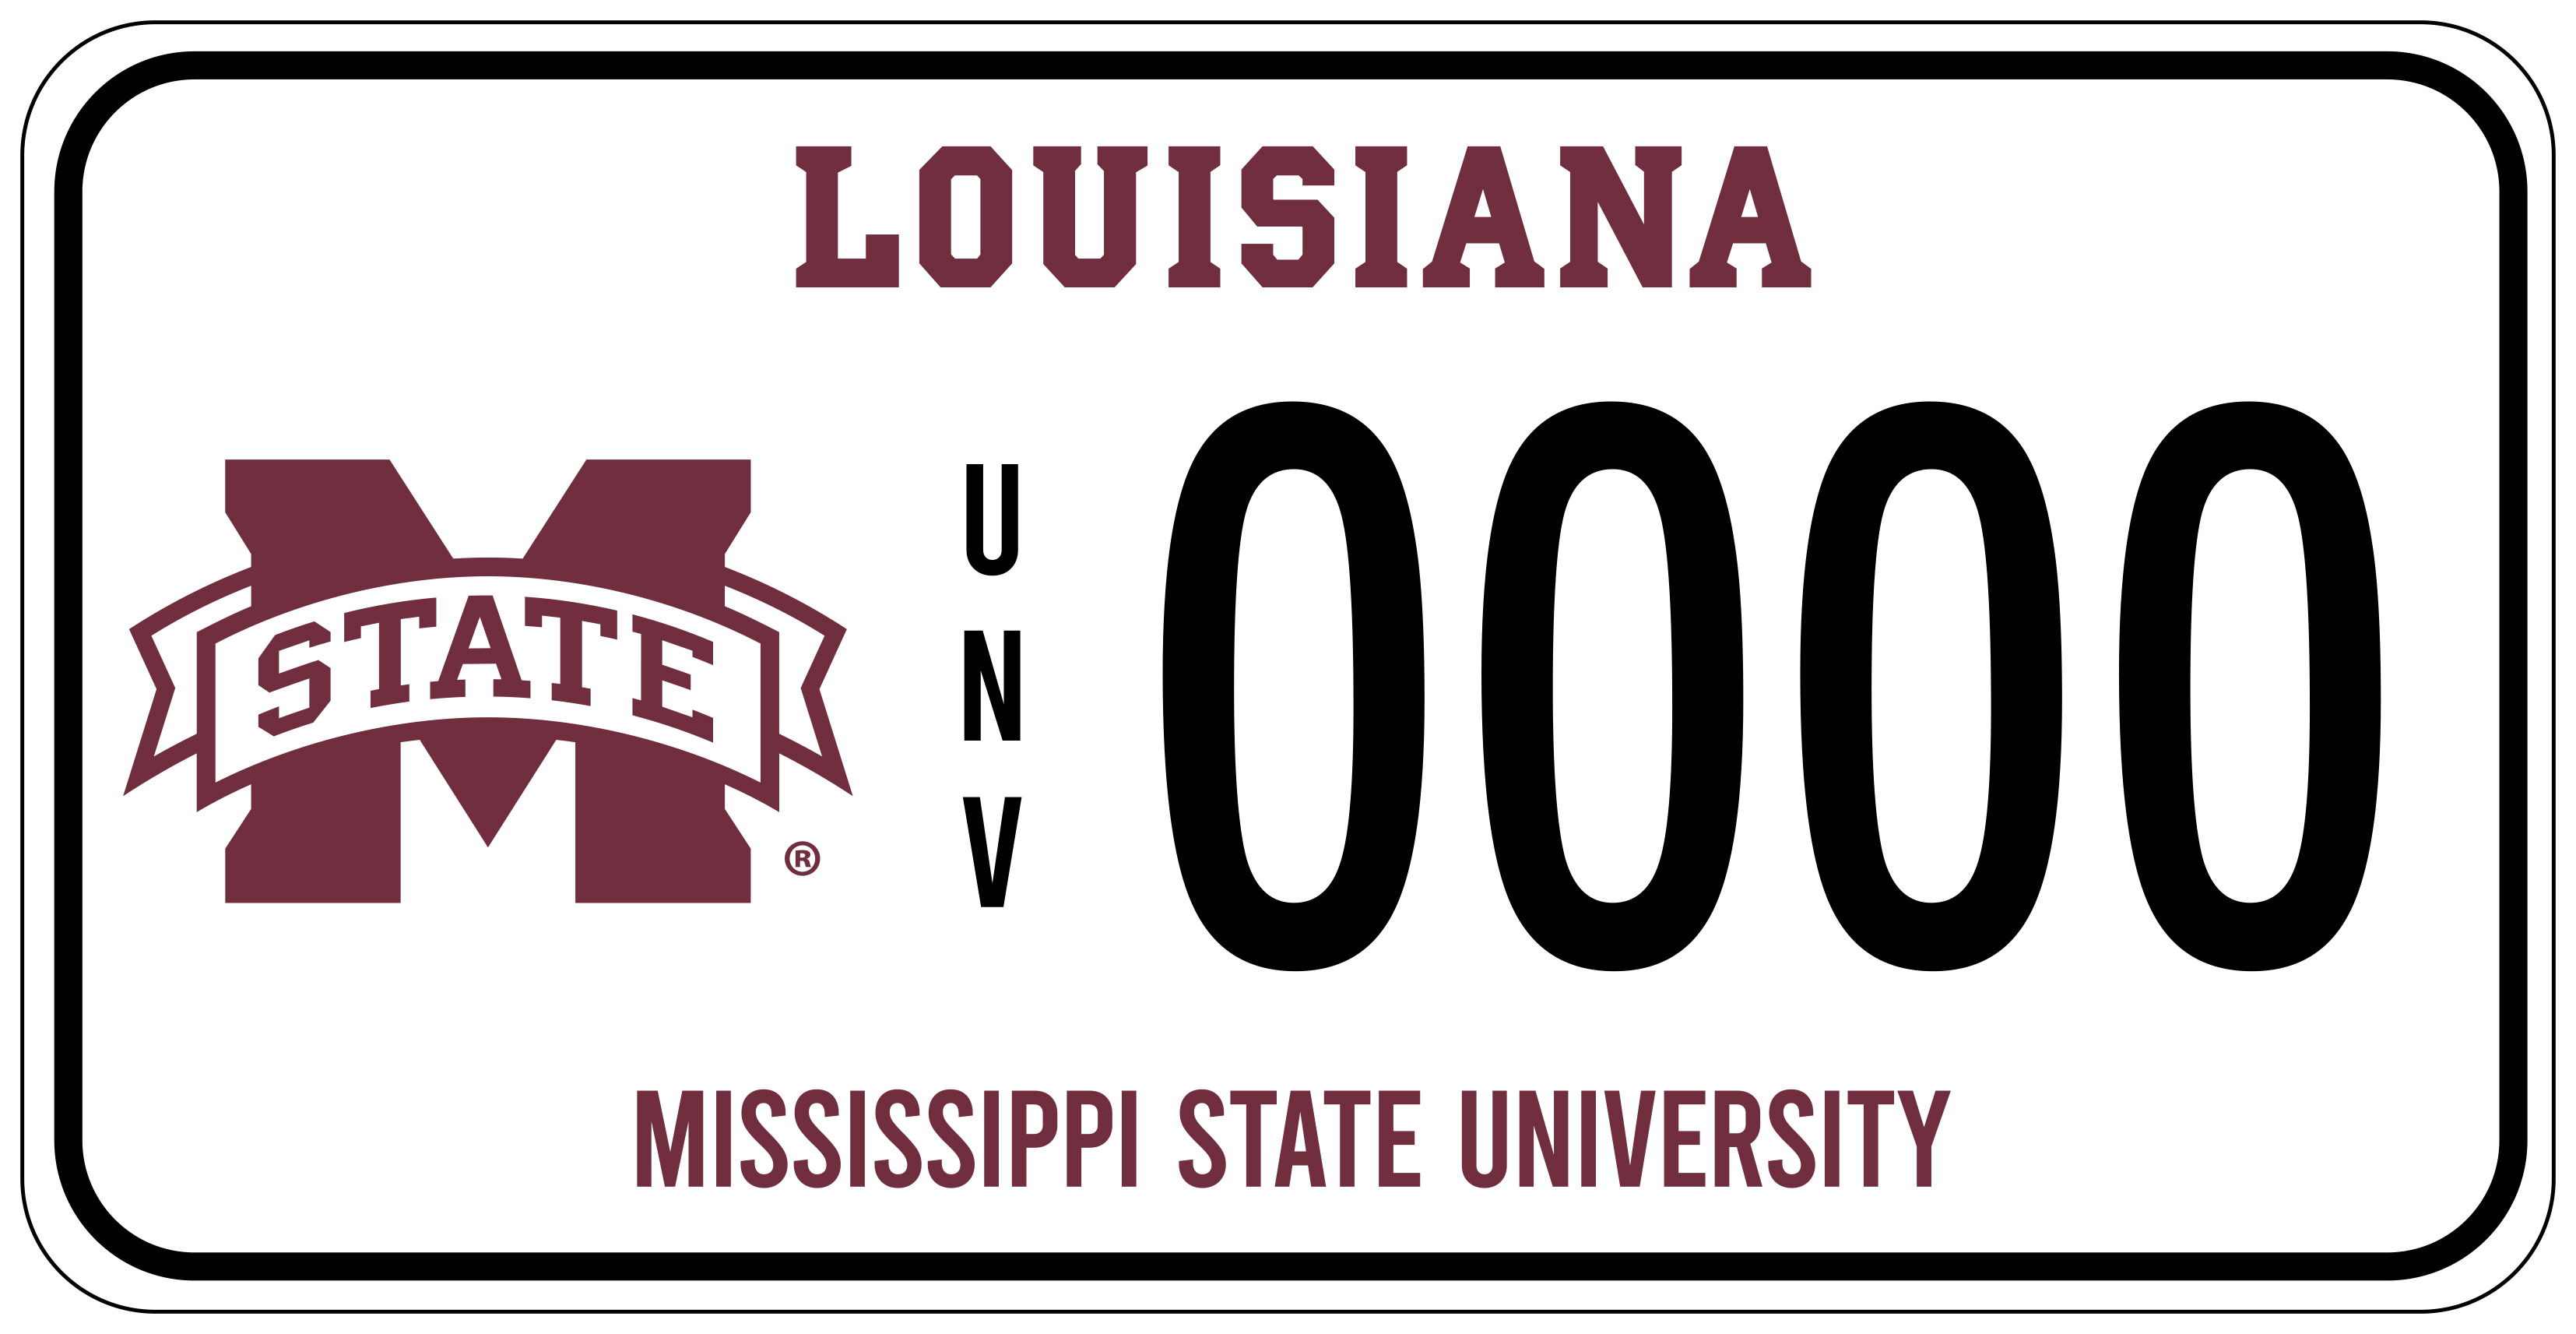 Louisiana MSU plate